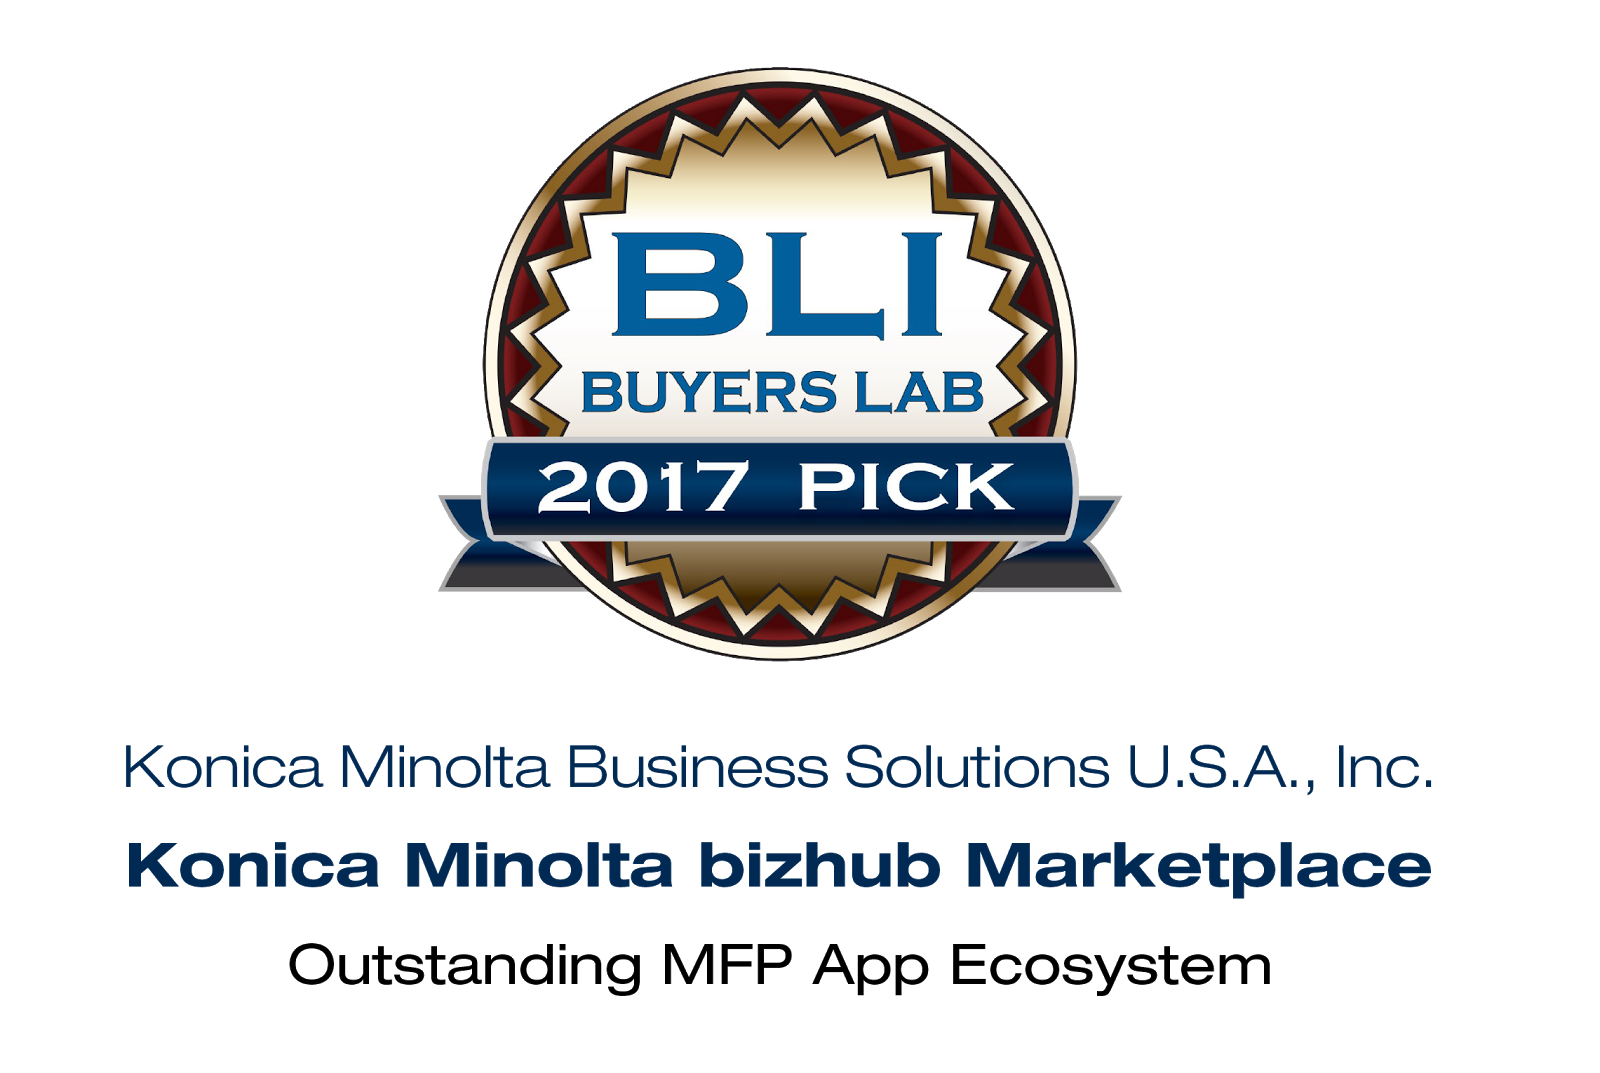 BLI Buyers Lab 2017 Pick. Konica Minolta Business Solutions U.S.A., Inc. Konica Minolta bizhub Marketplace. Outstanding MFP App Ecosystem.